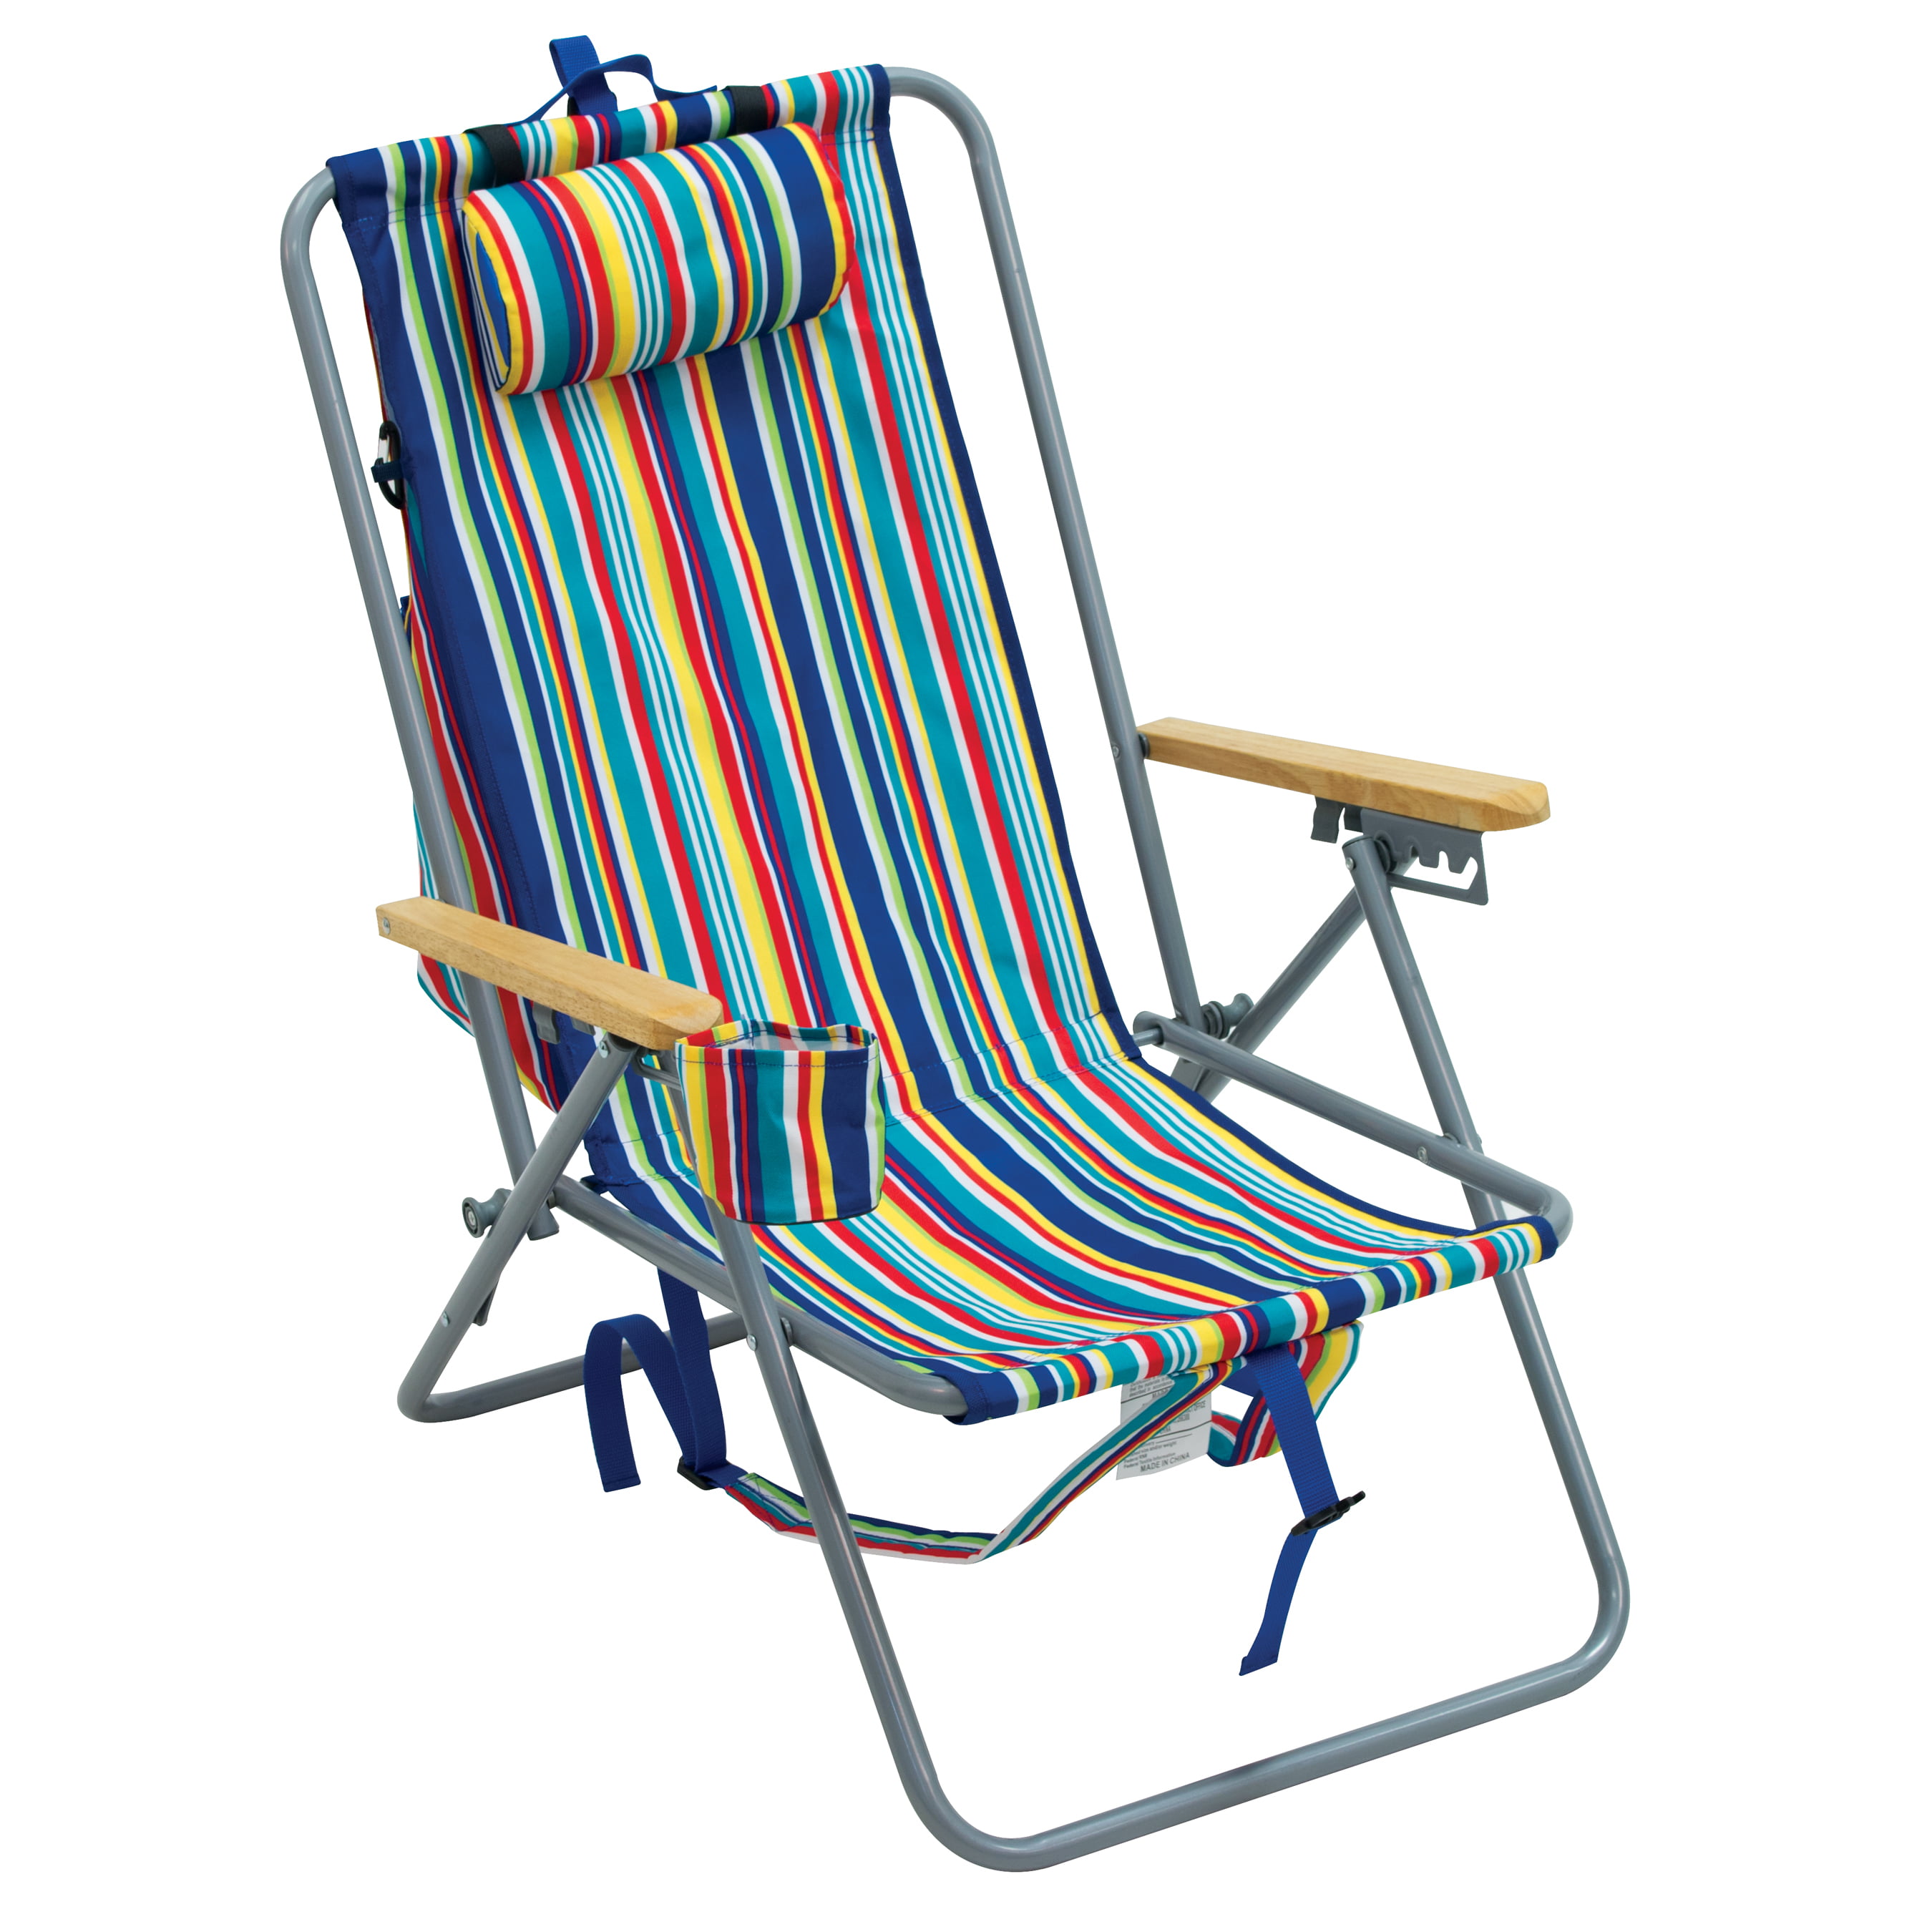 Unique Rio Adventure Backpack Beach Chair for Simple Design